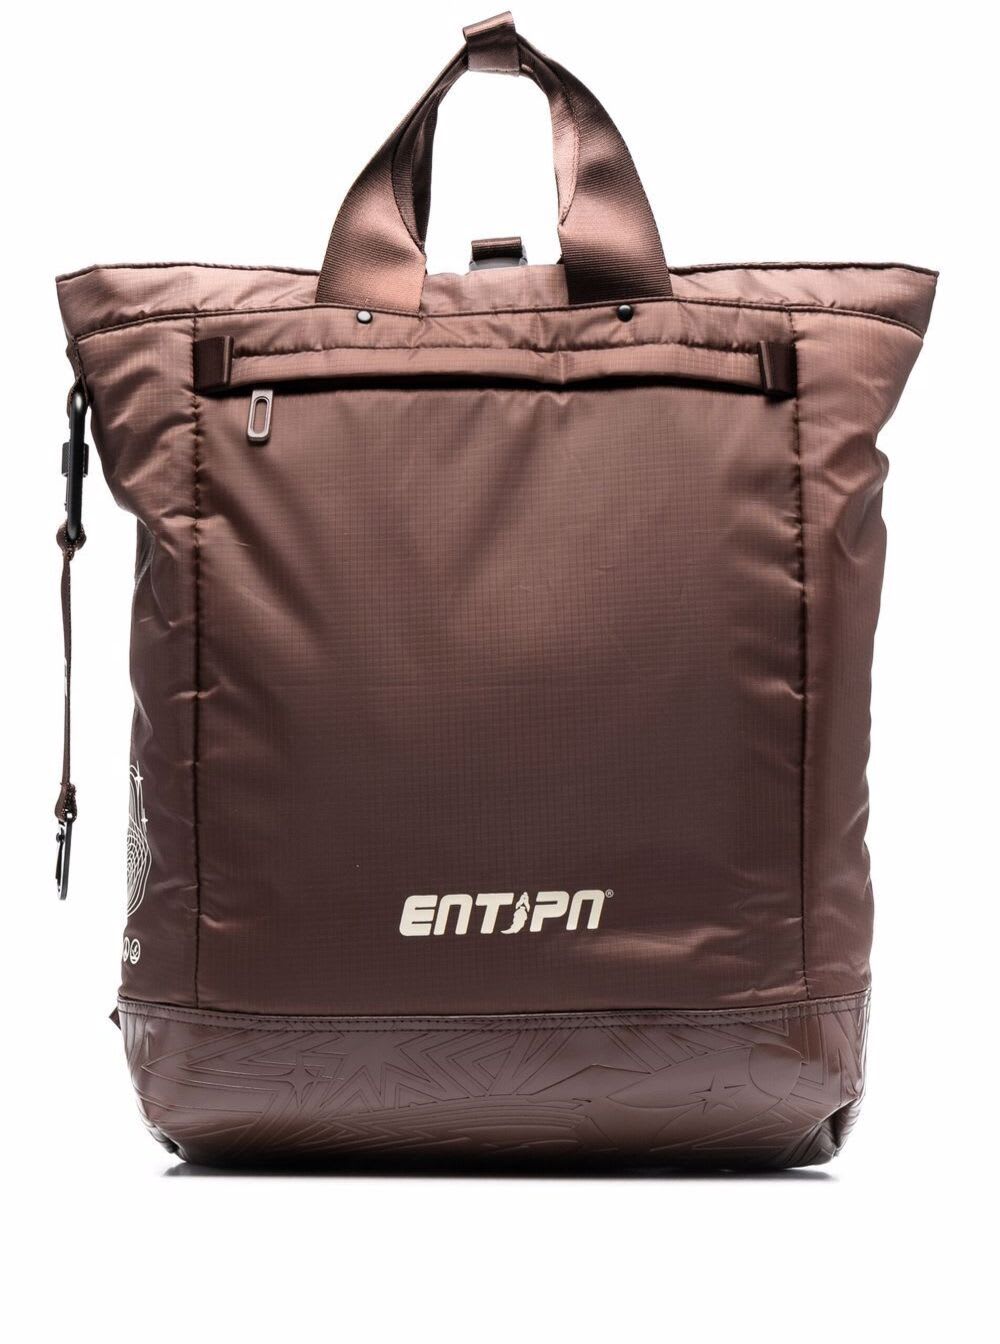 Enterprise Japan Mans Brown Fabric Backpack With Logo